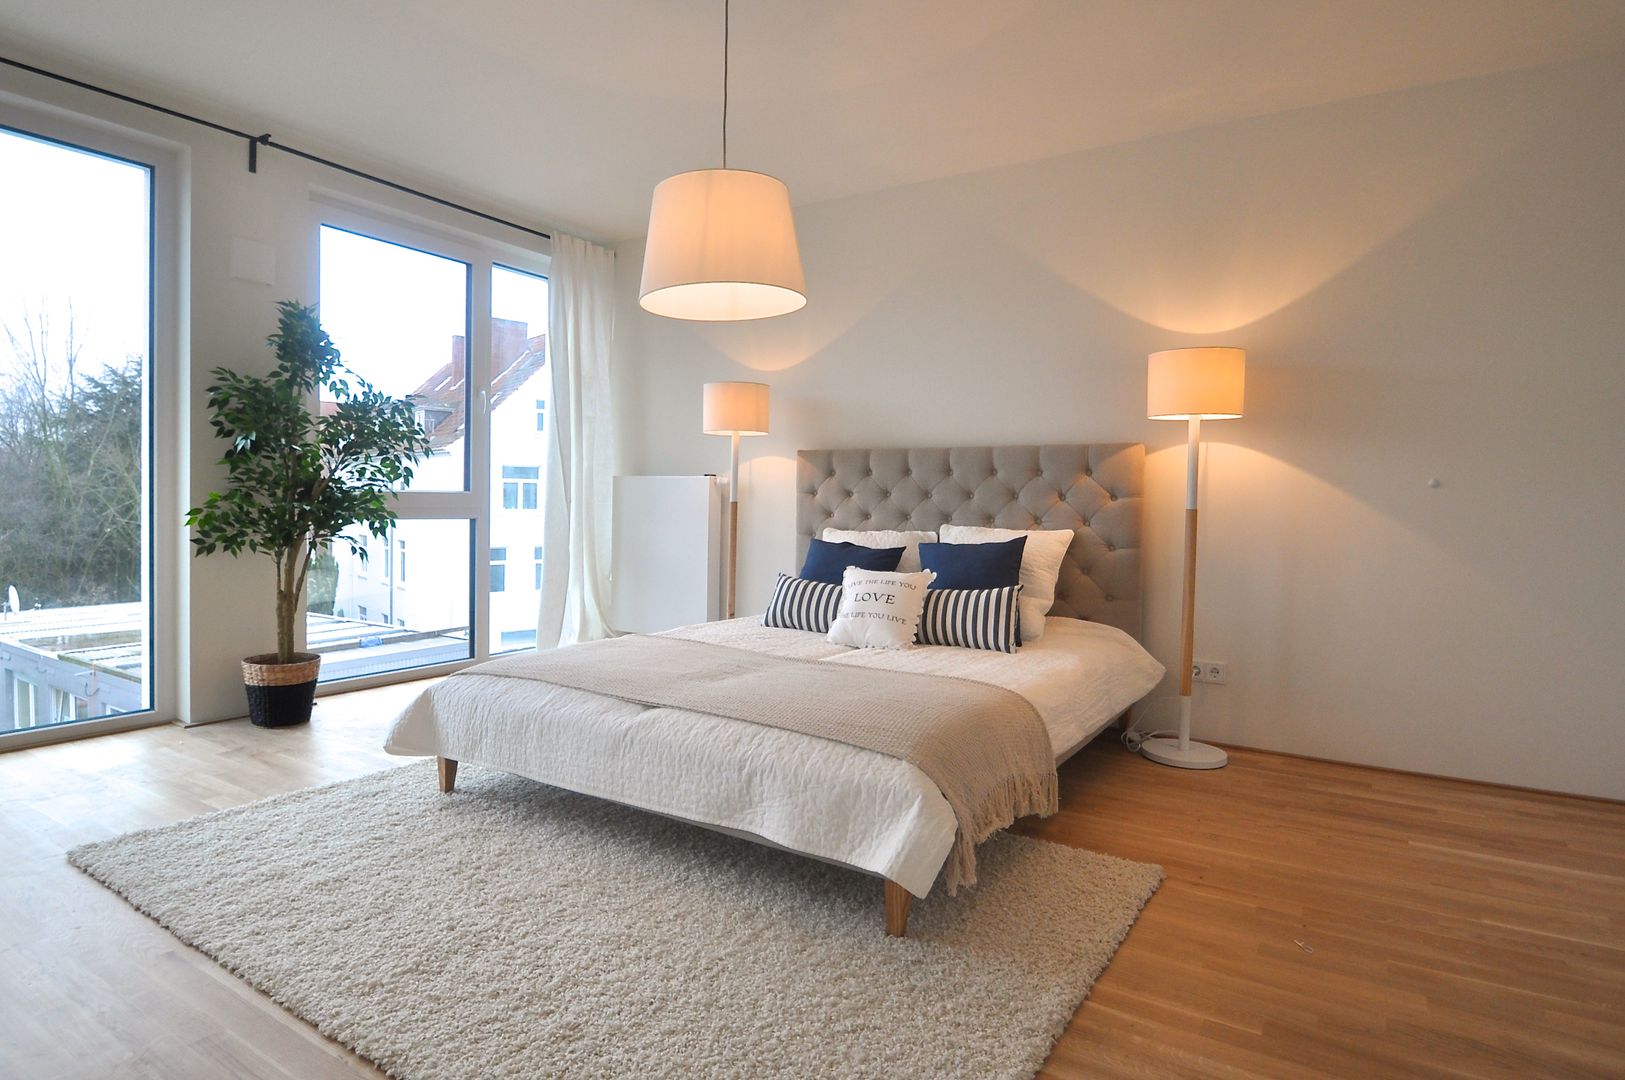 Musterwohnung 'Ton in Ton', K. A. K. A. Scandinavian style bedroom